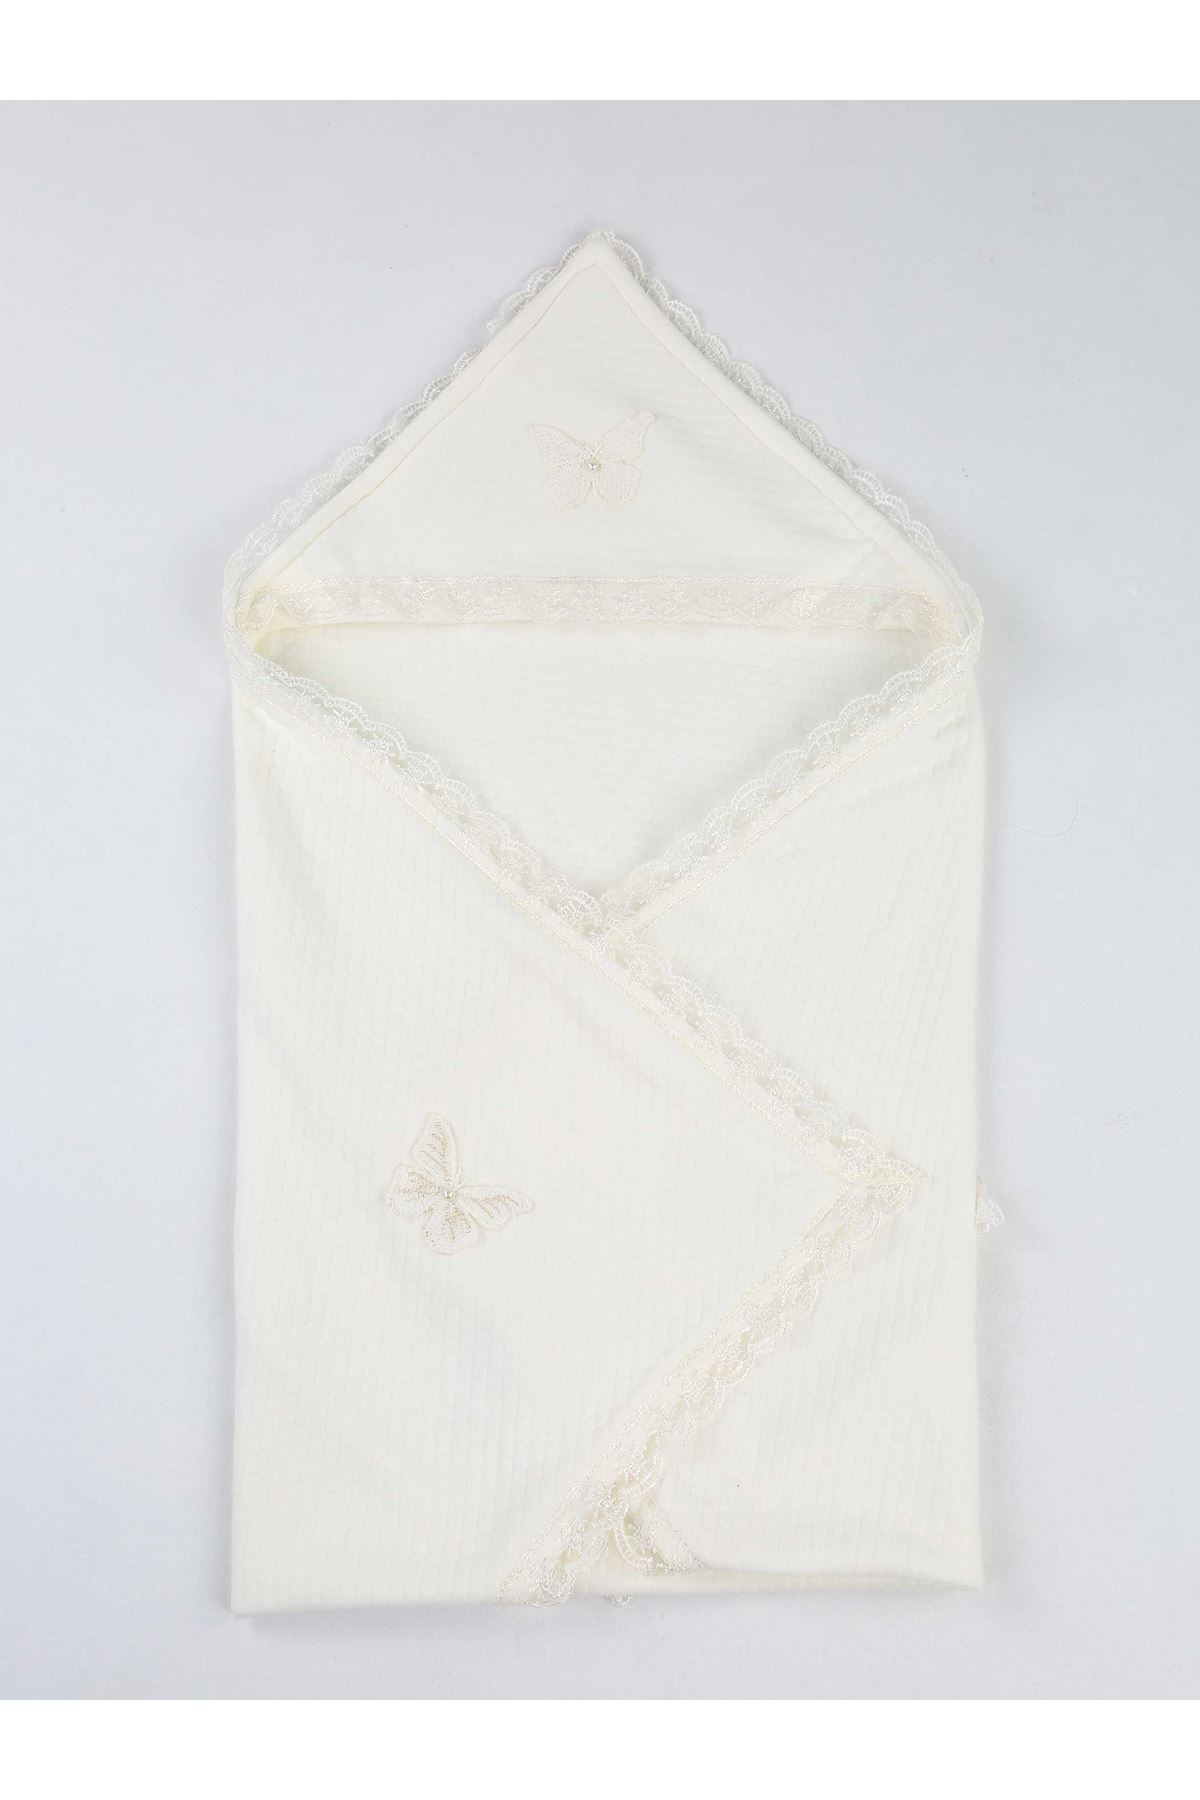 White 85 X85 cm Baby Swaddle Blanket